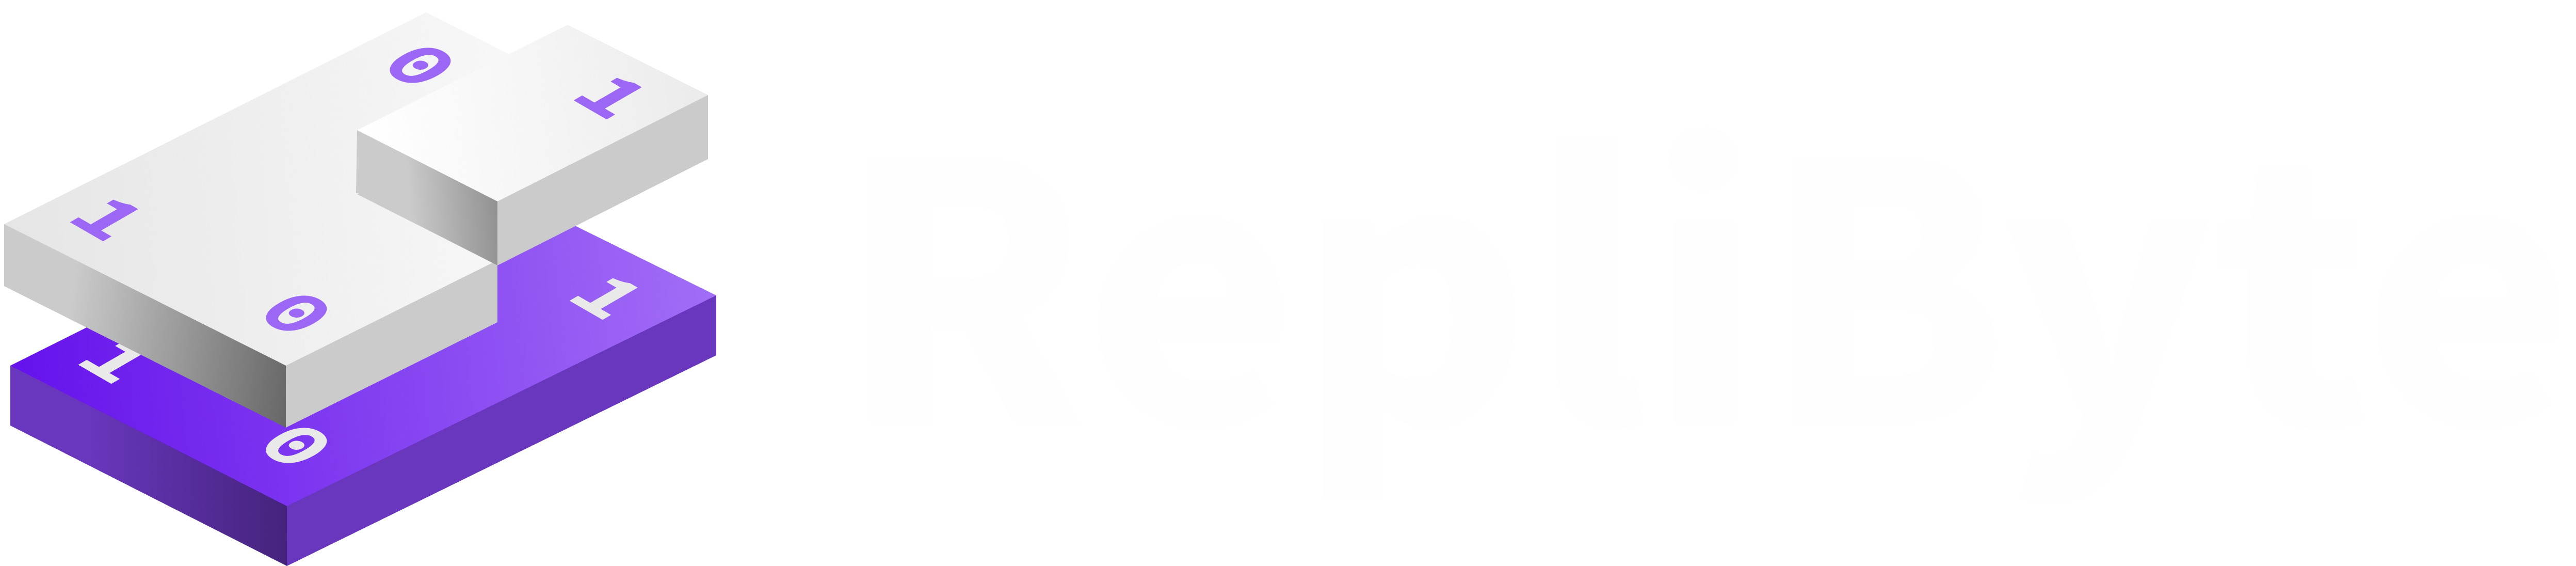 replibyte logo